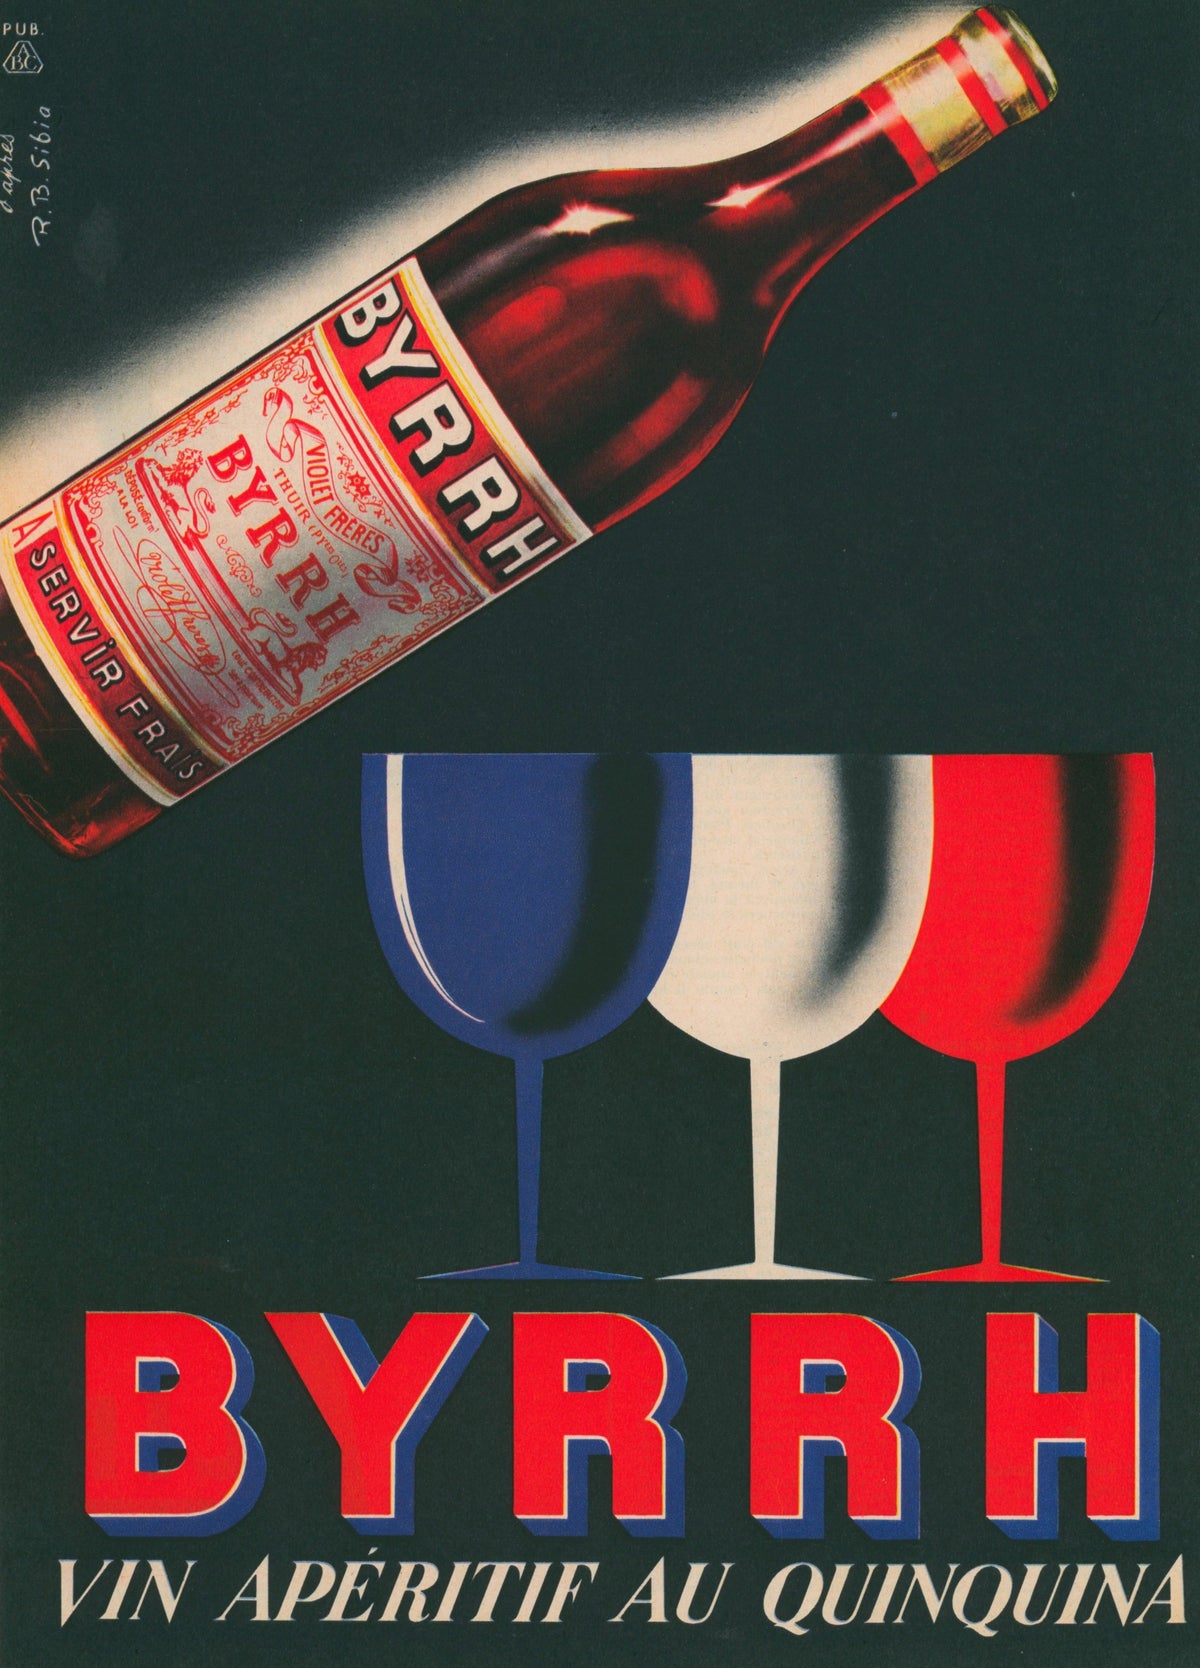 Byrrh RWB- French Magazine Ad - Authentic Vintage Antique Print